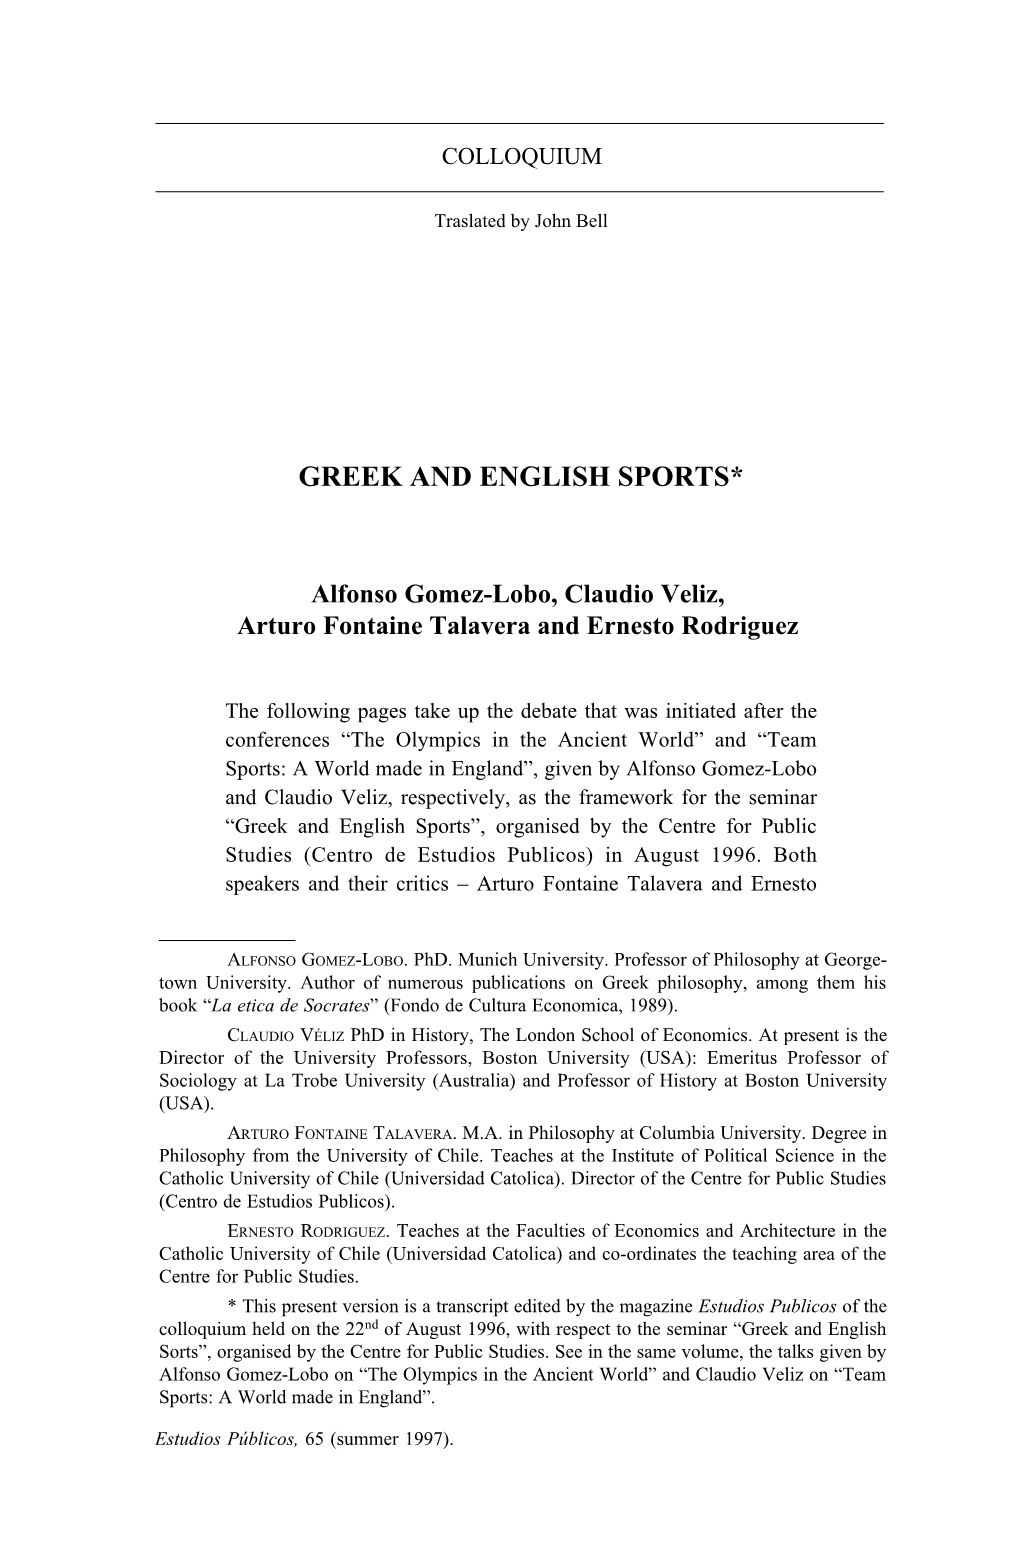 Greek and English Sports*